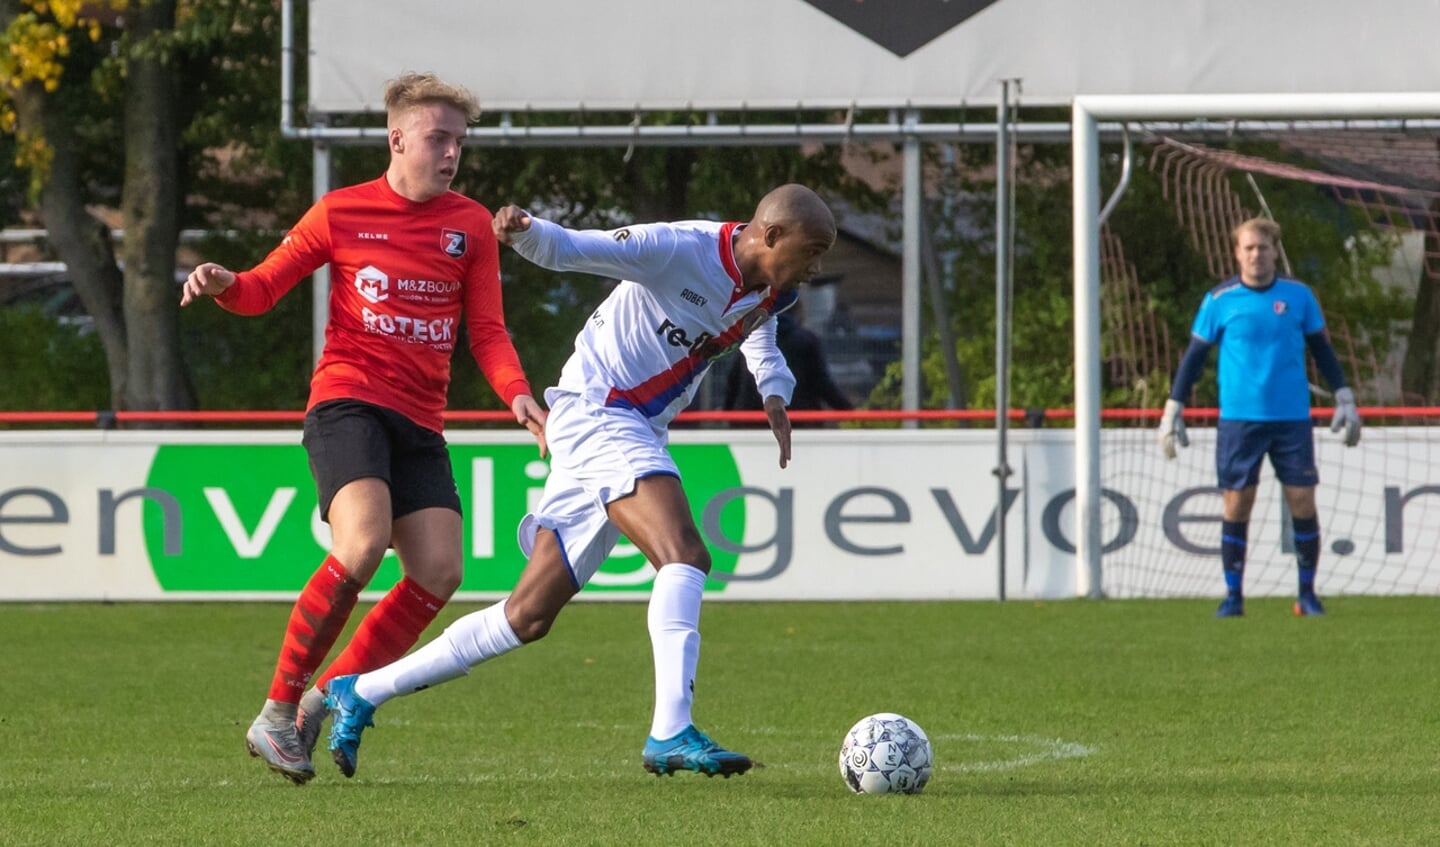 • De Zwerver - SV Charlois (1-1).